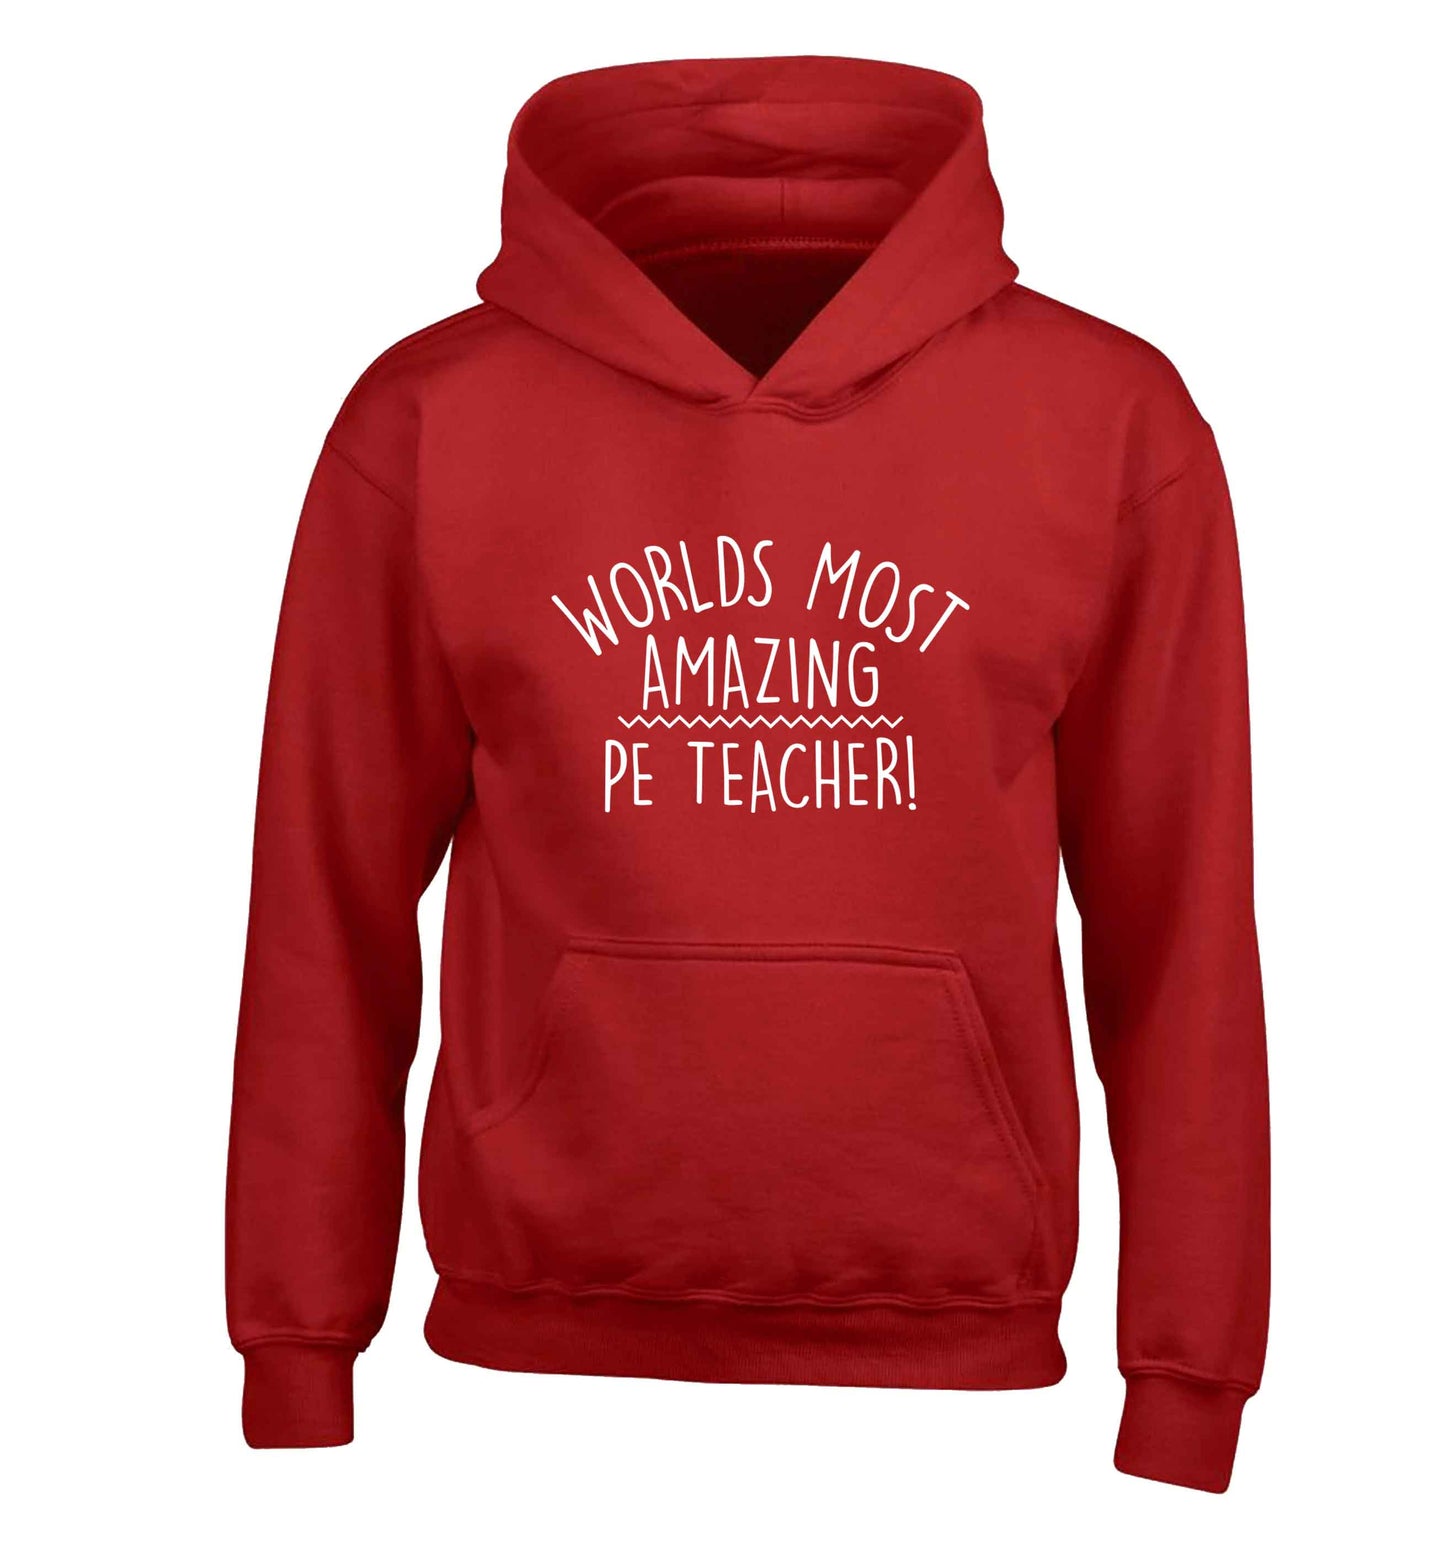 Worlds most amazing PE teacher children's red hoodie 12-13 Years